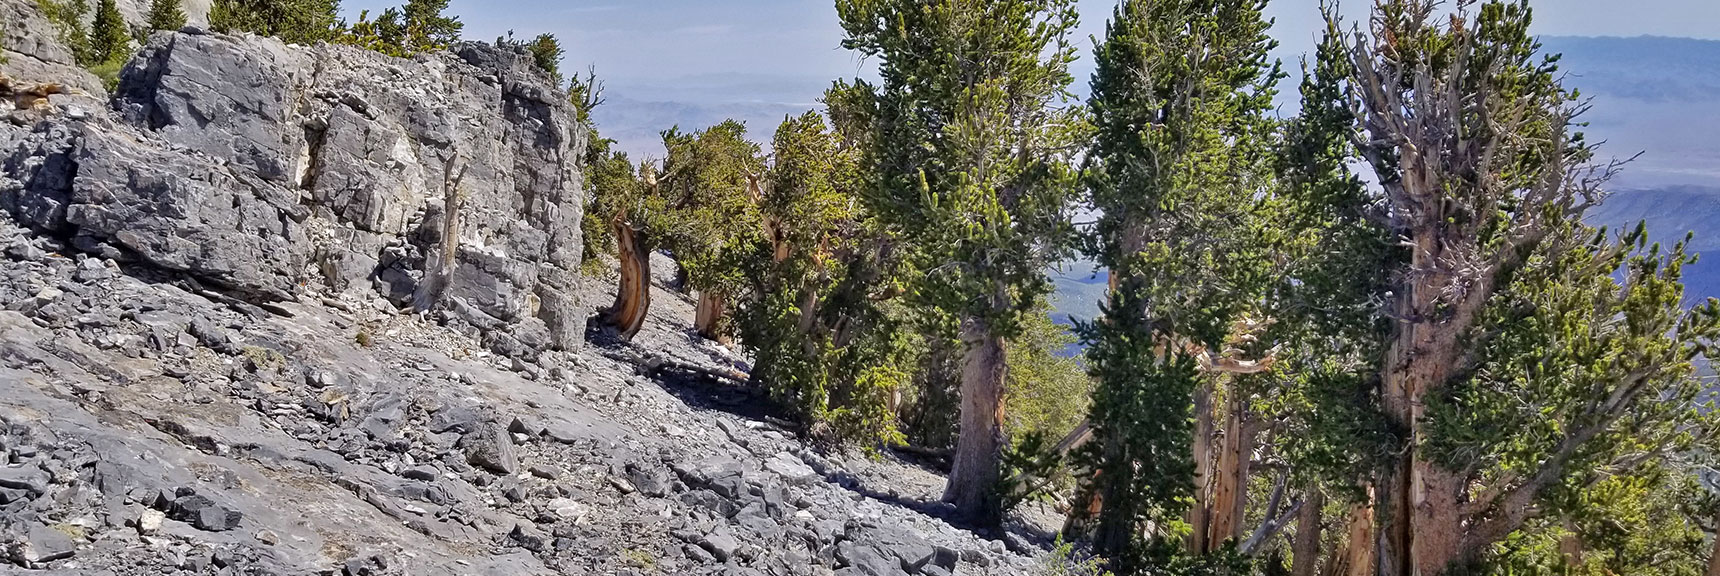 Bristlecone Pines Arising from Granite Rock of Mummy's Knees | Mummy Mountain's Knees | Mt. Charleston Wilderness, Nevada 023